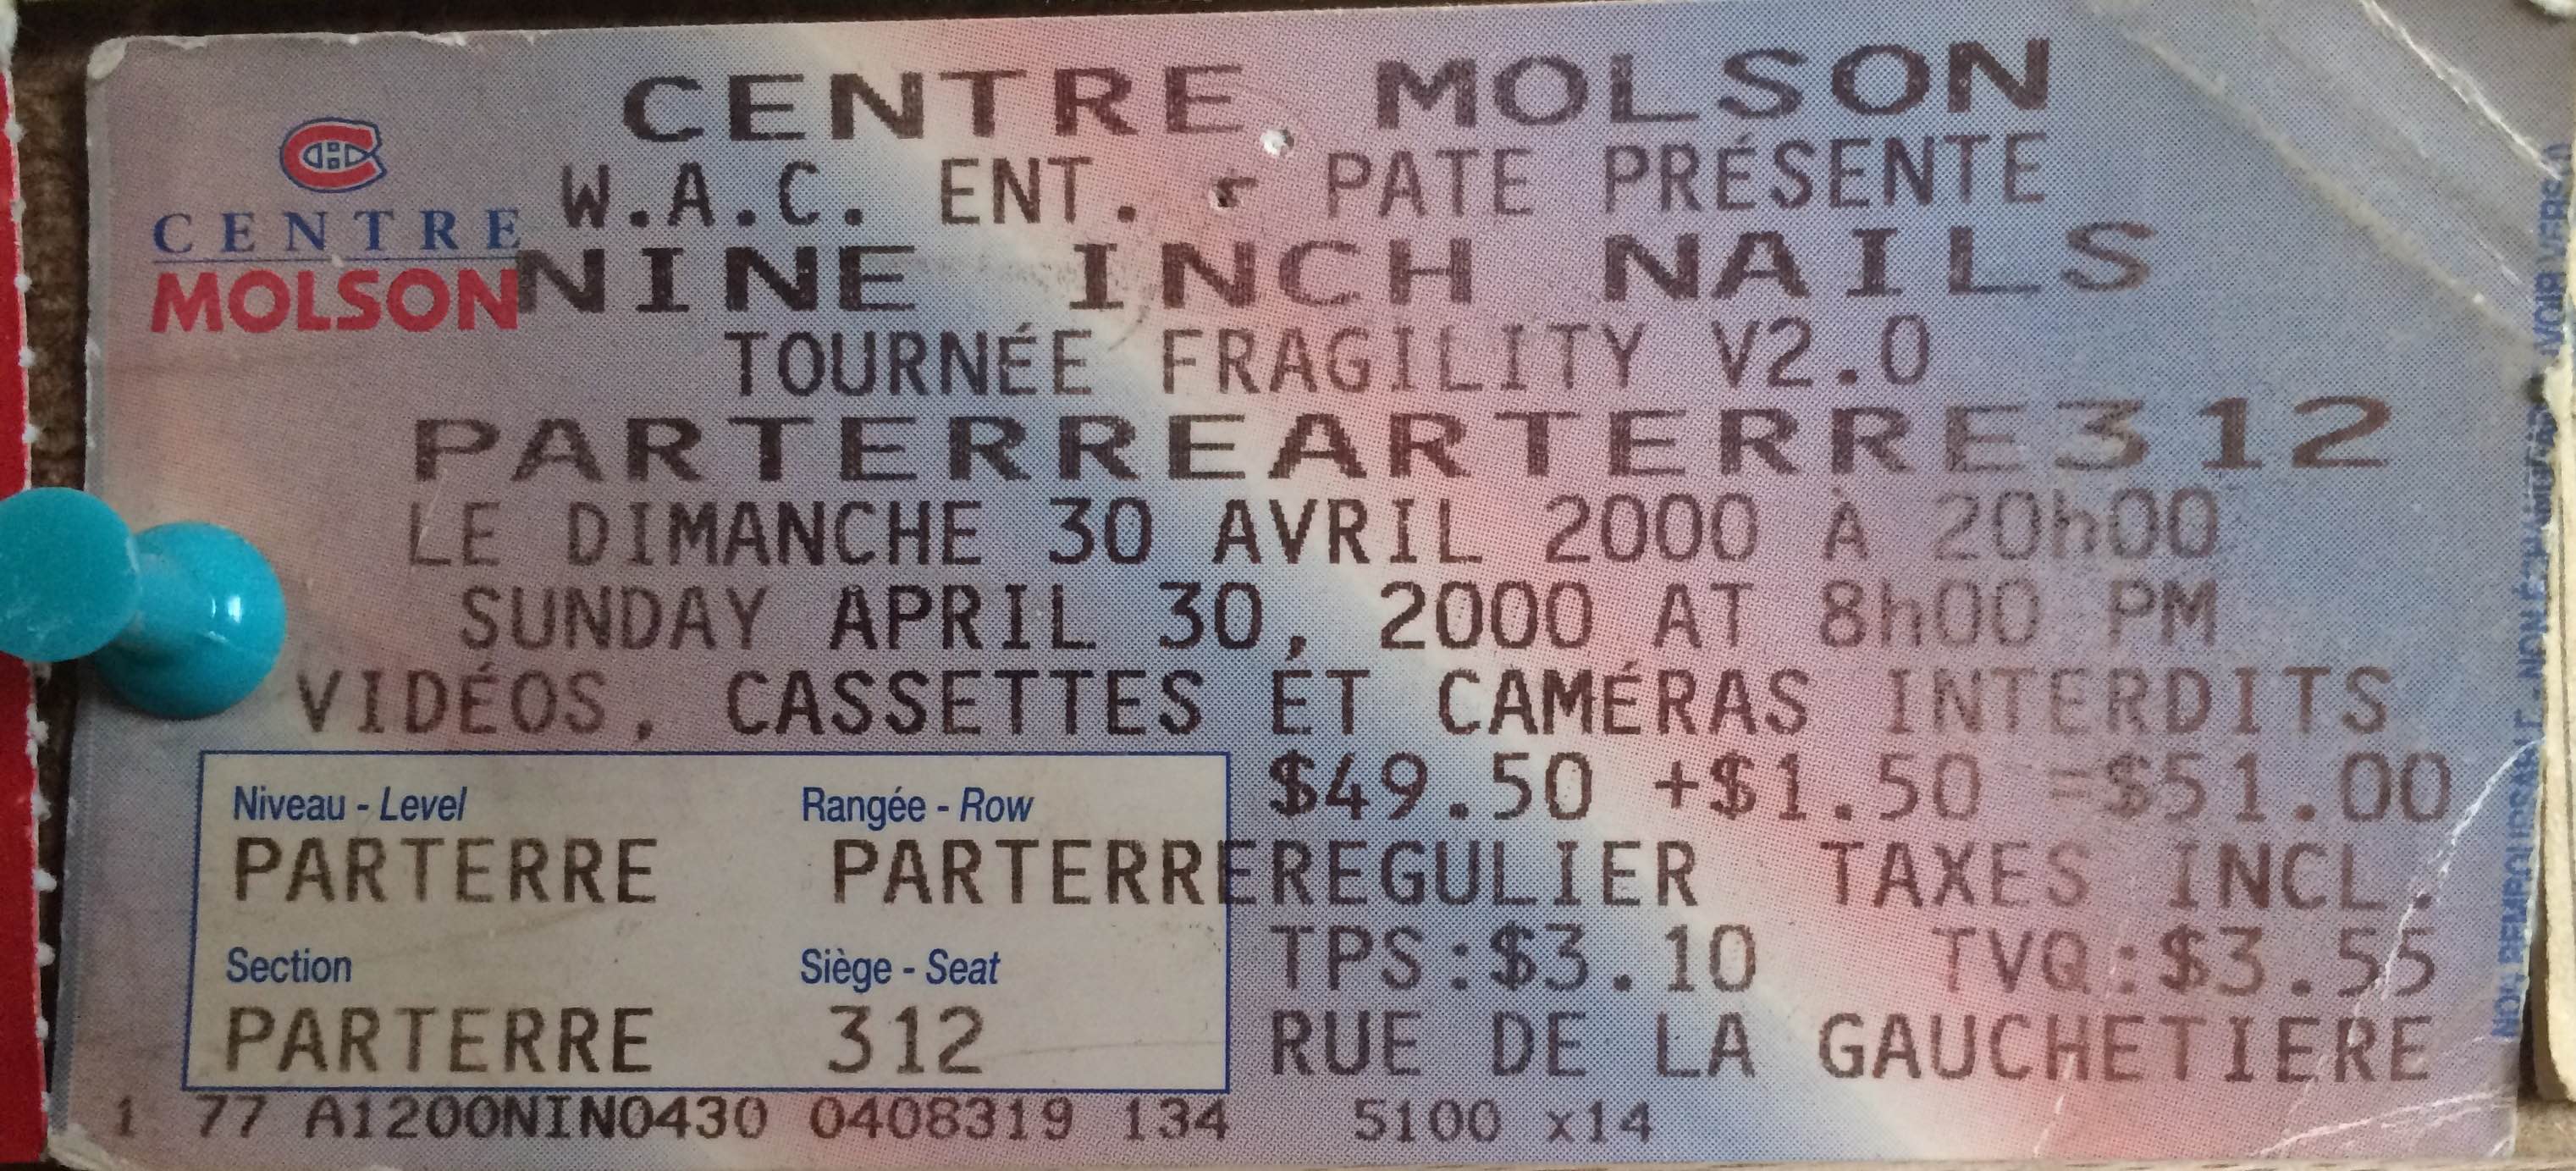 2000/04/30 Ticket